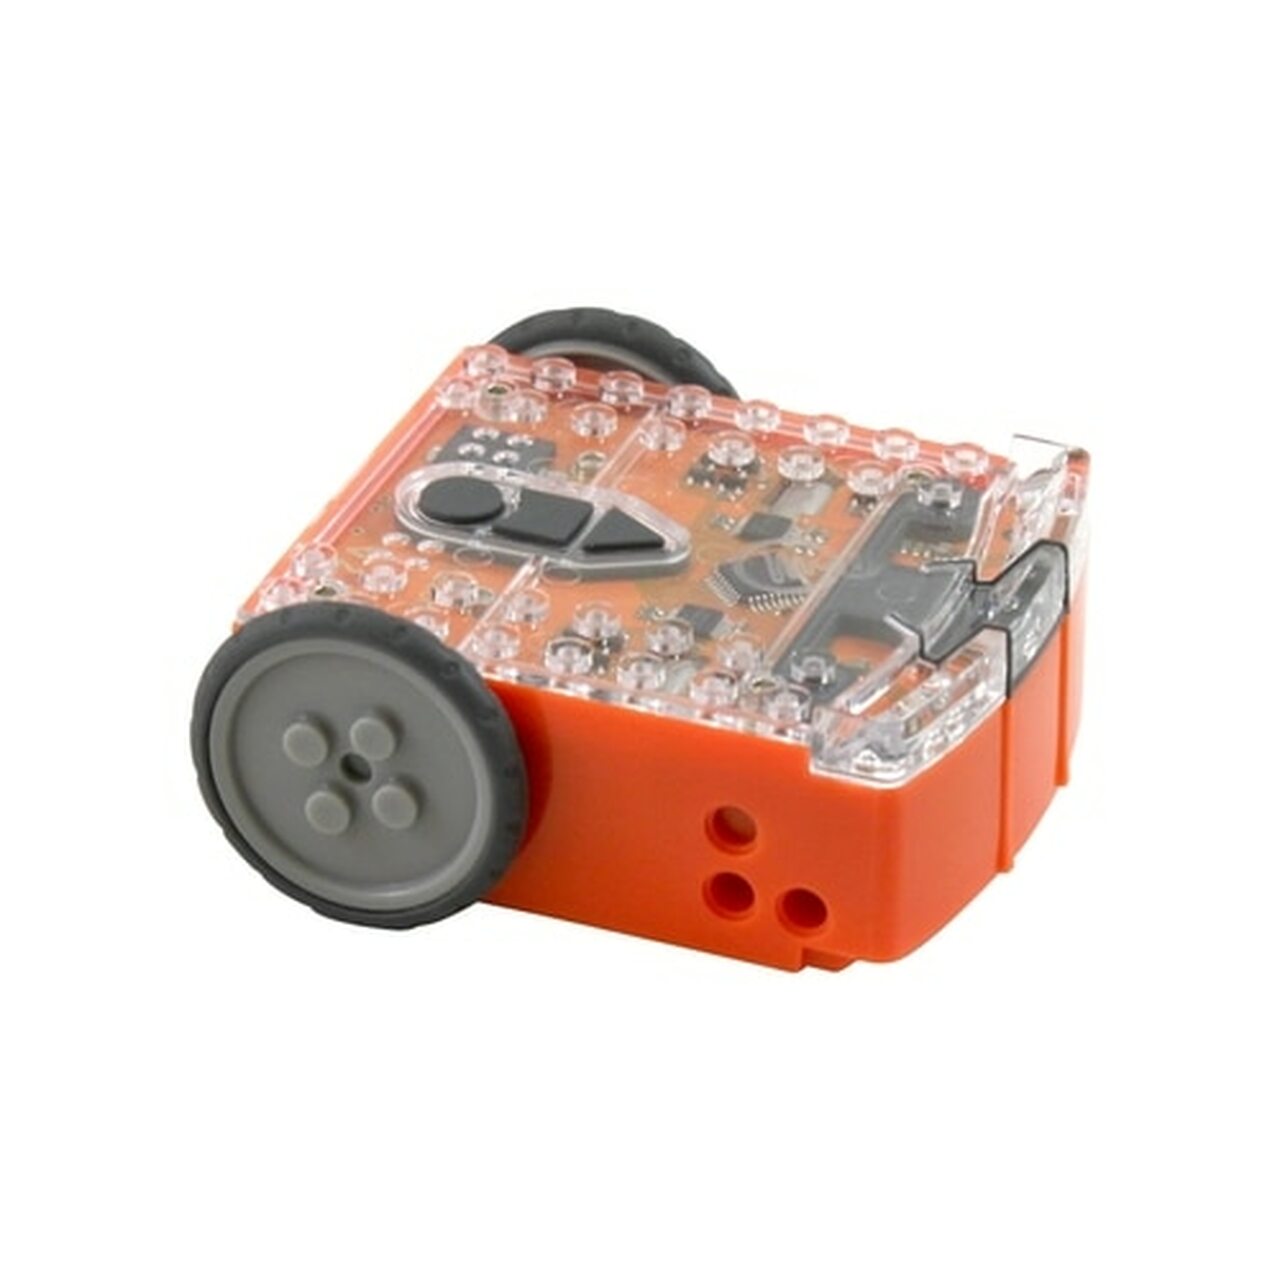 Edison Educational Robot Kit – Set of 10 for STEAM Education – Robotics and Coding - ARVRedtech.com | AR & VR Education Technology